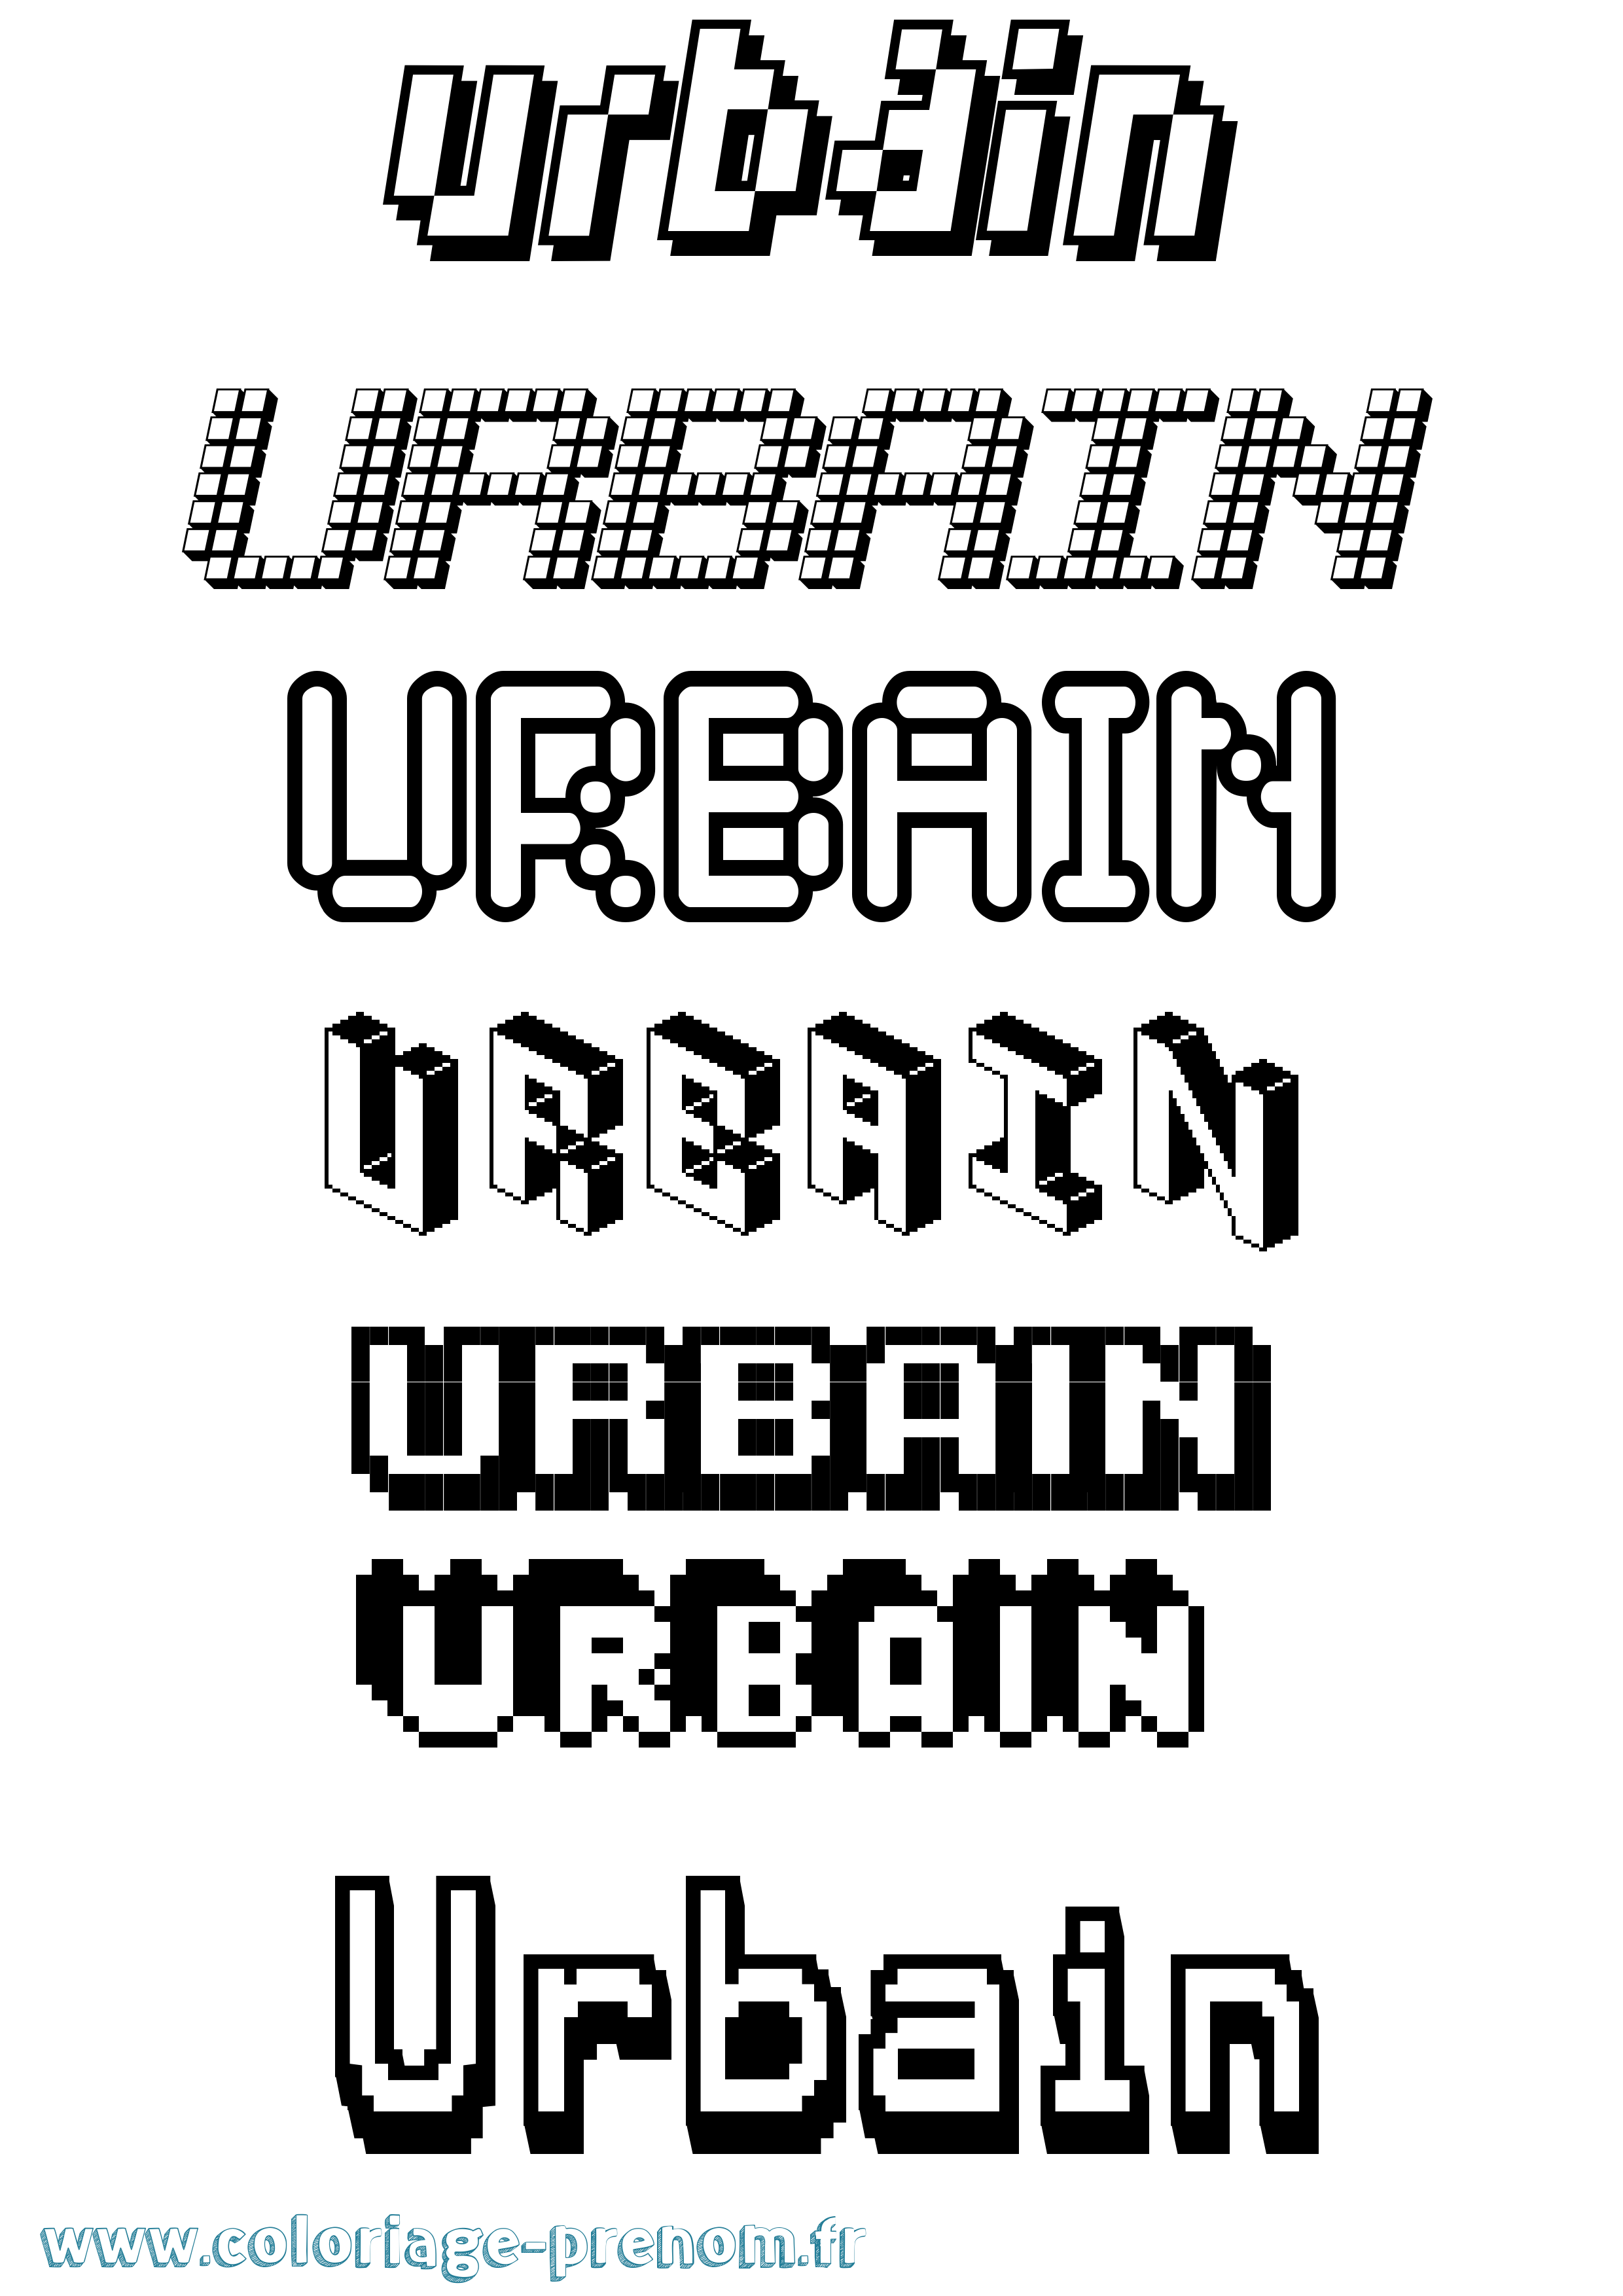 Coloriage prénom Urbain Pixel